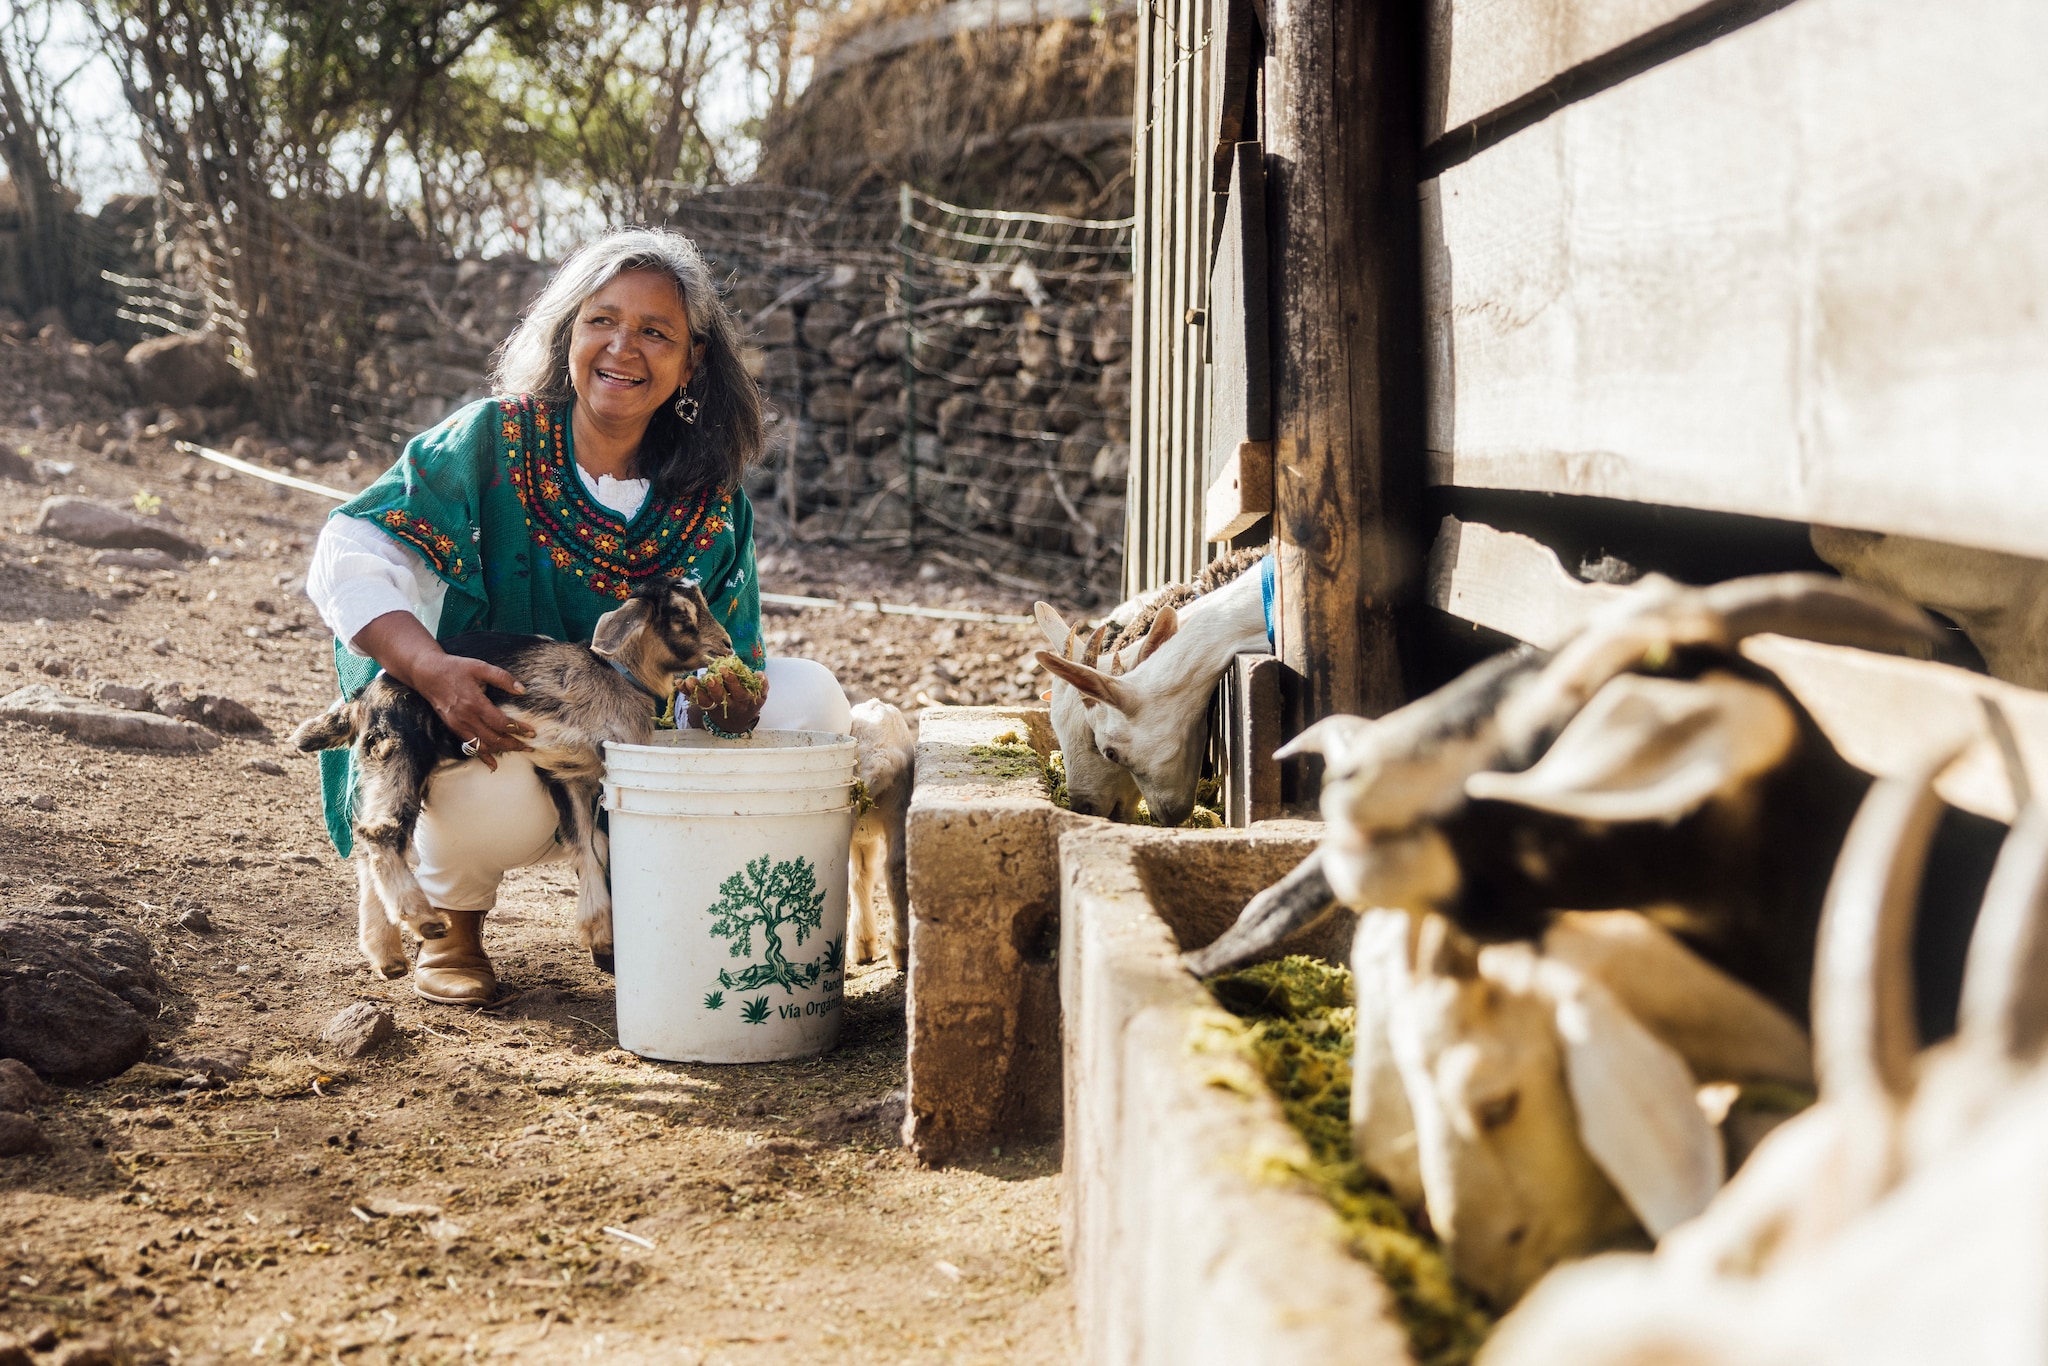 Woman feeding goats